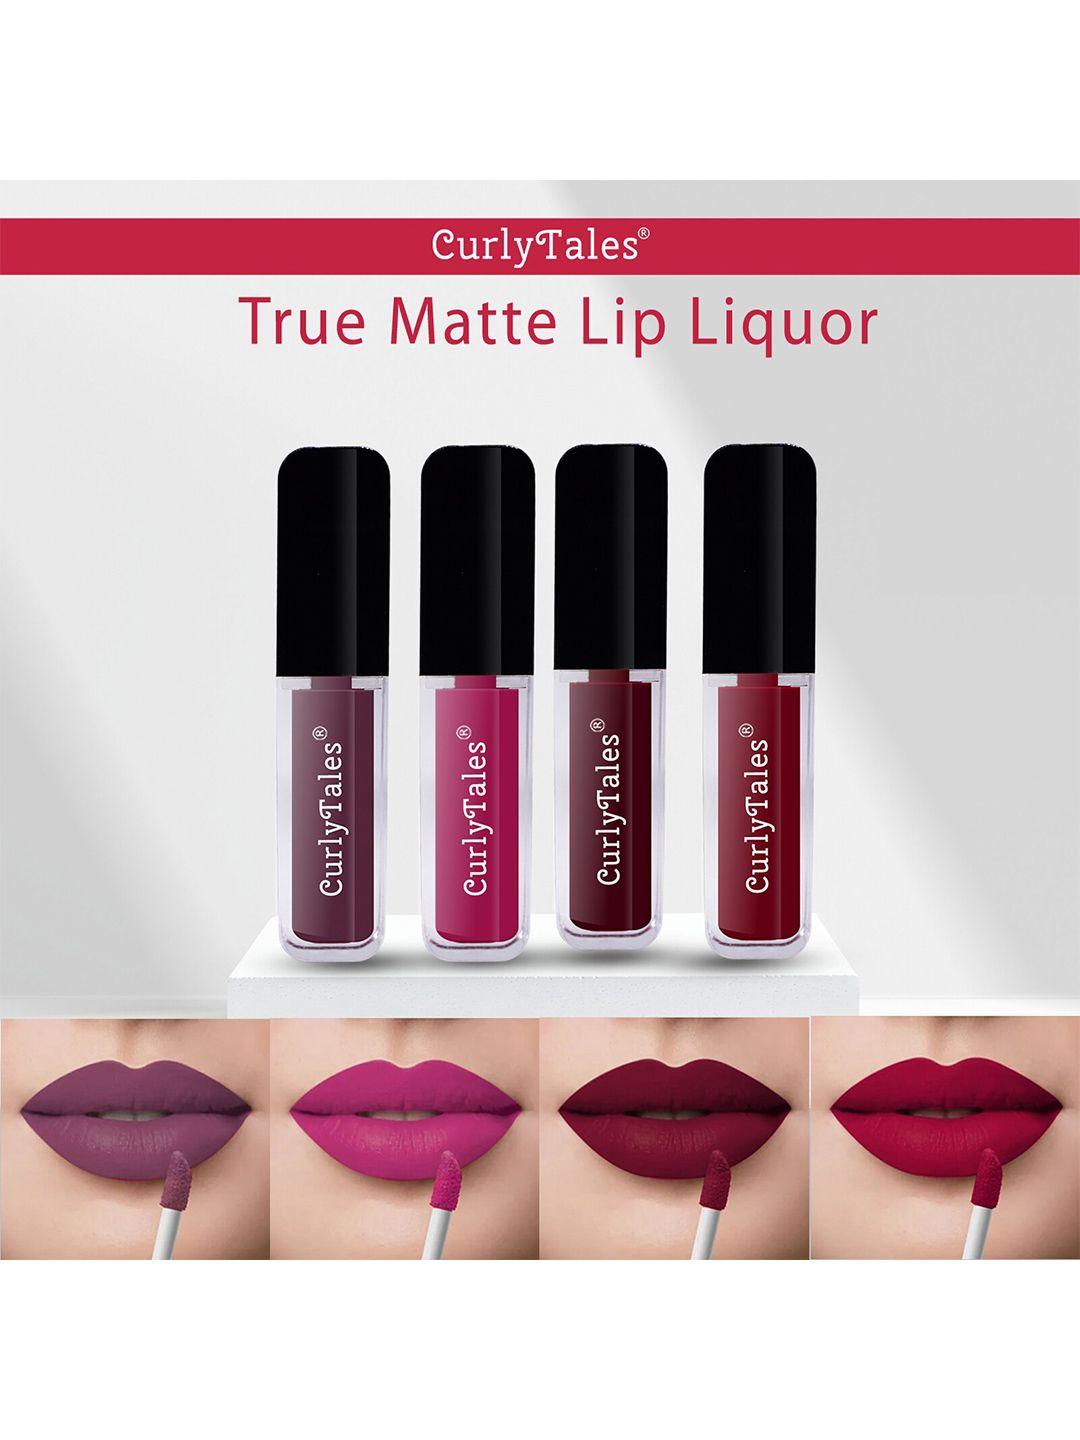 curlytales set of 4 lightweight & waterproof true matte liquid lipsticks - 01, 12, 13, 14